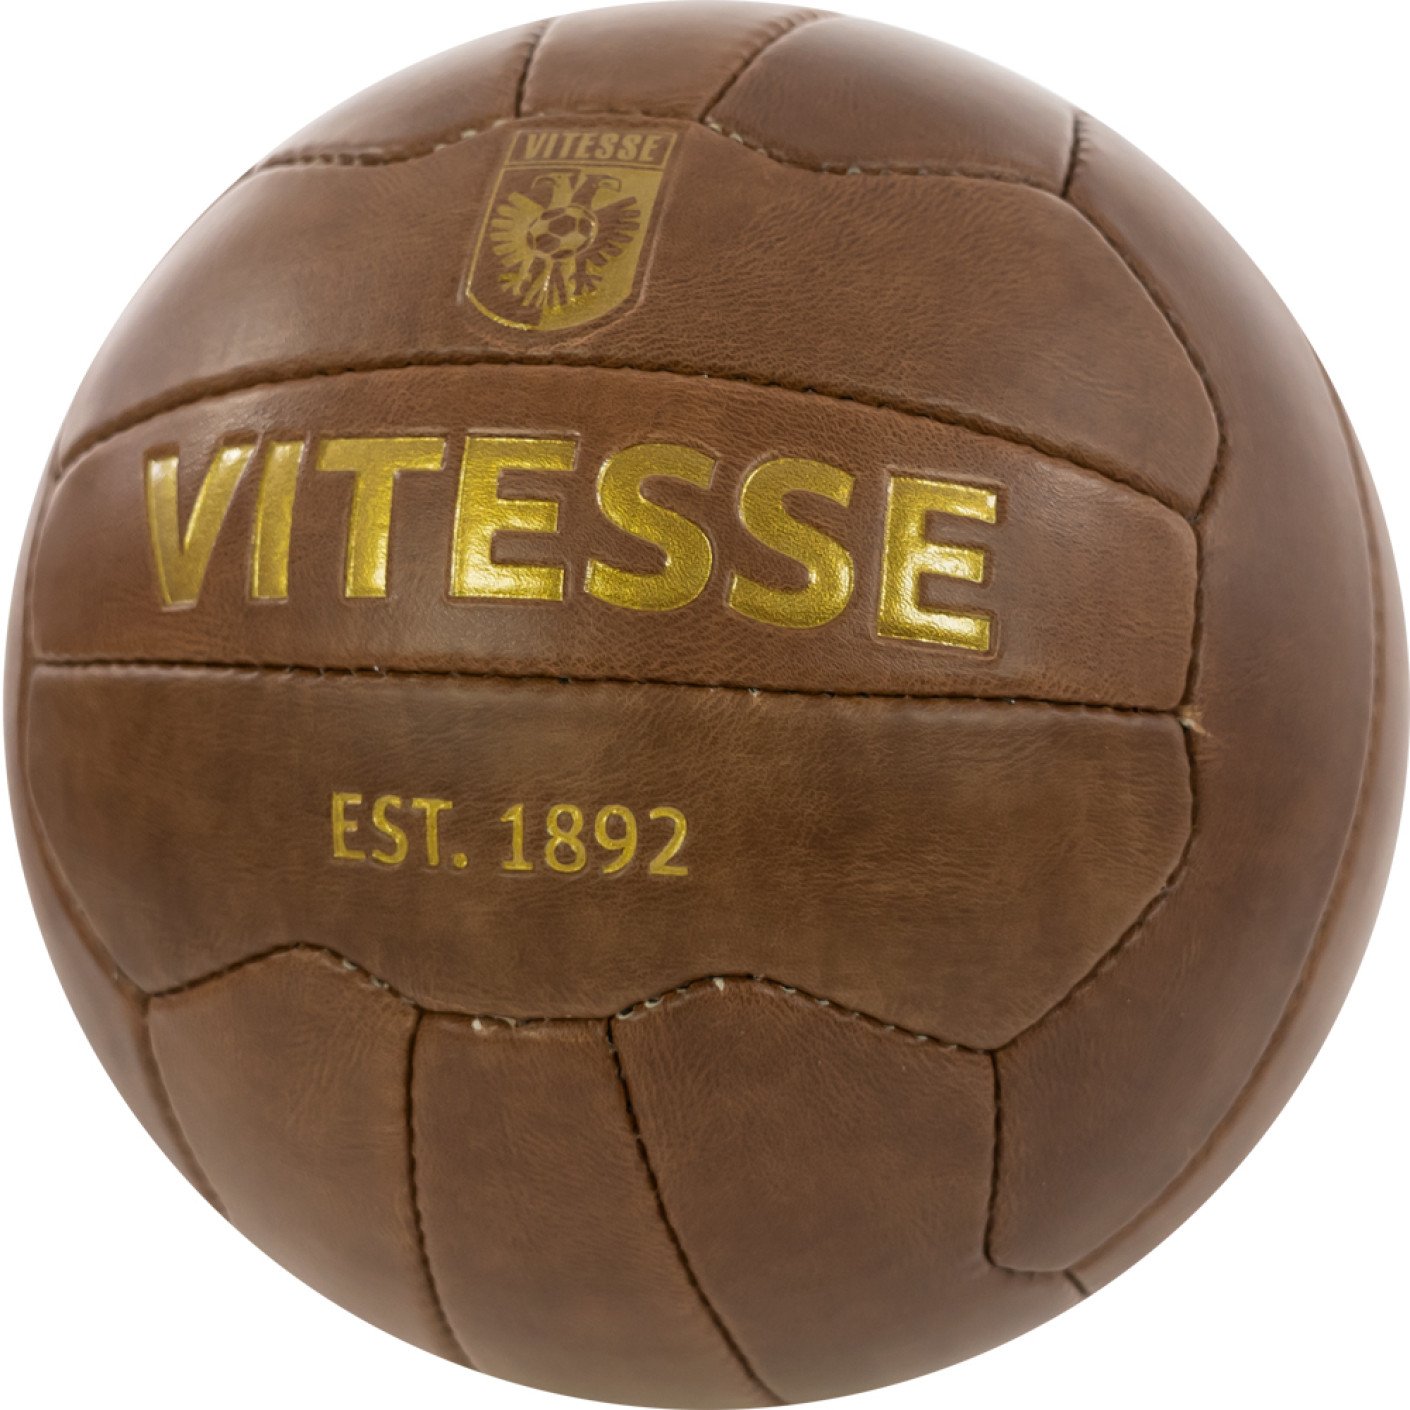 Vitesse Retro voetbal + Gratis Standaard